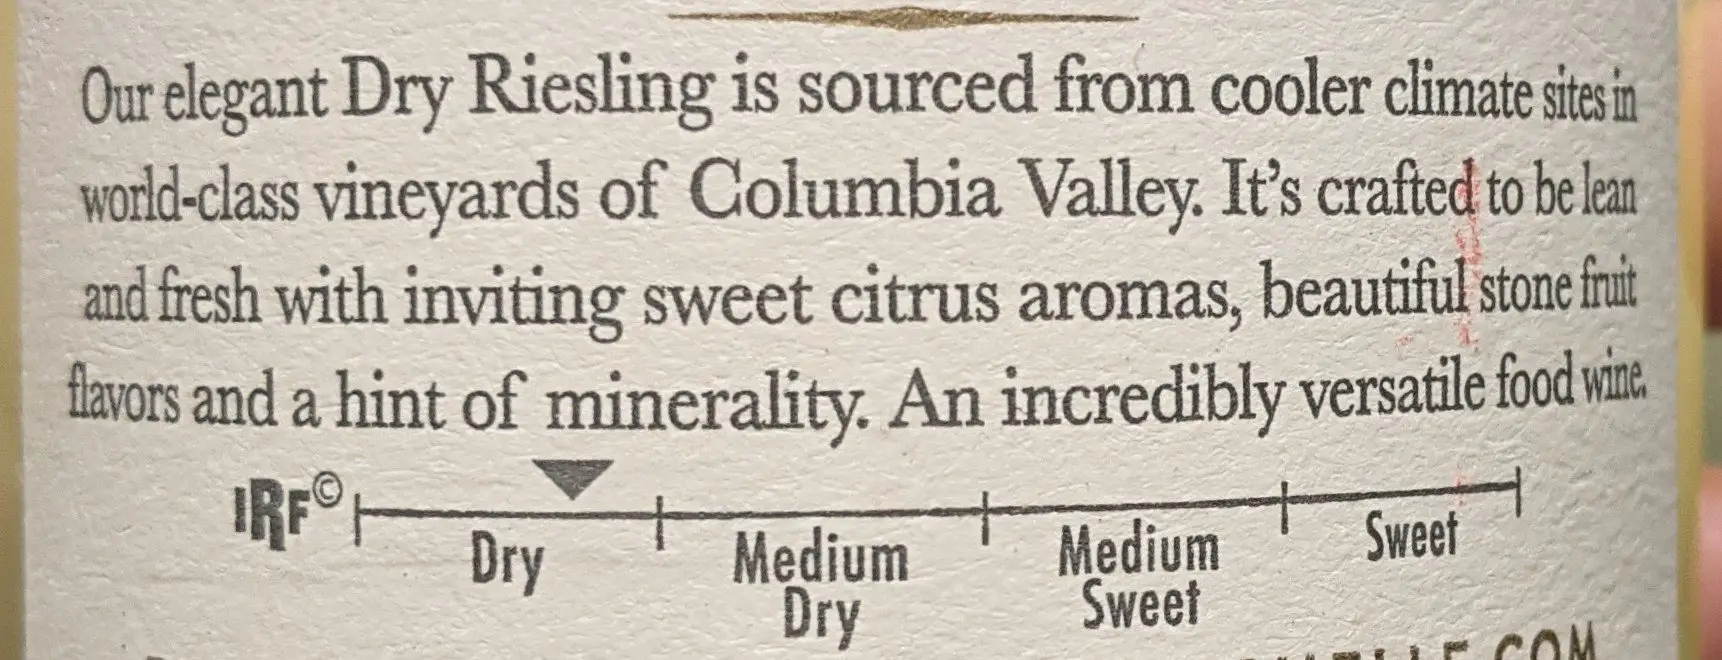 riesling wine guide - riesling sweetness indicator